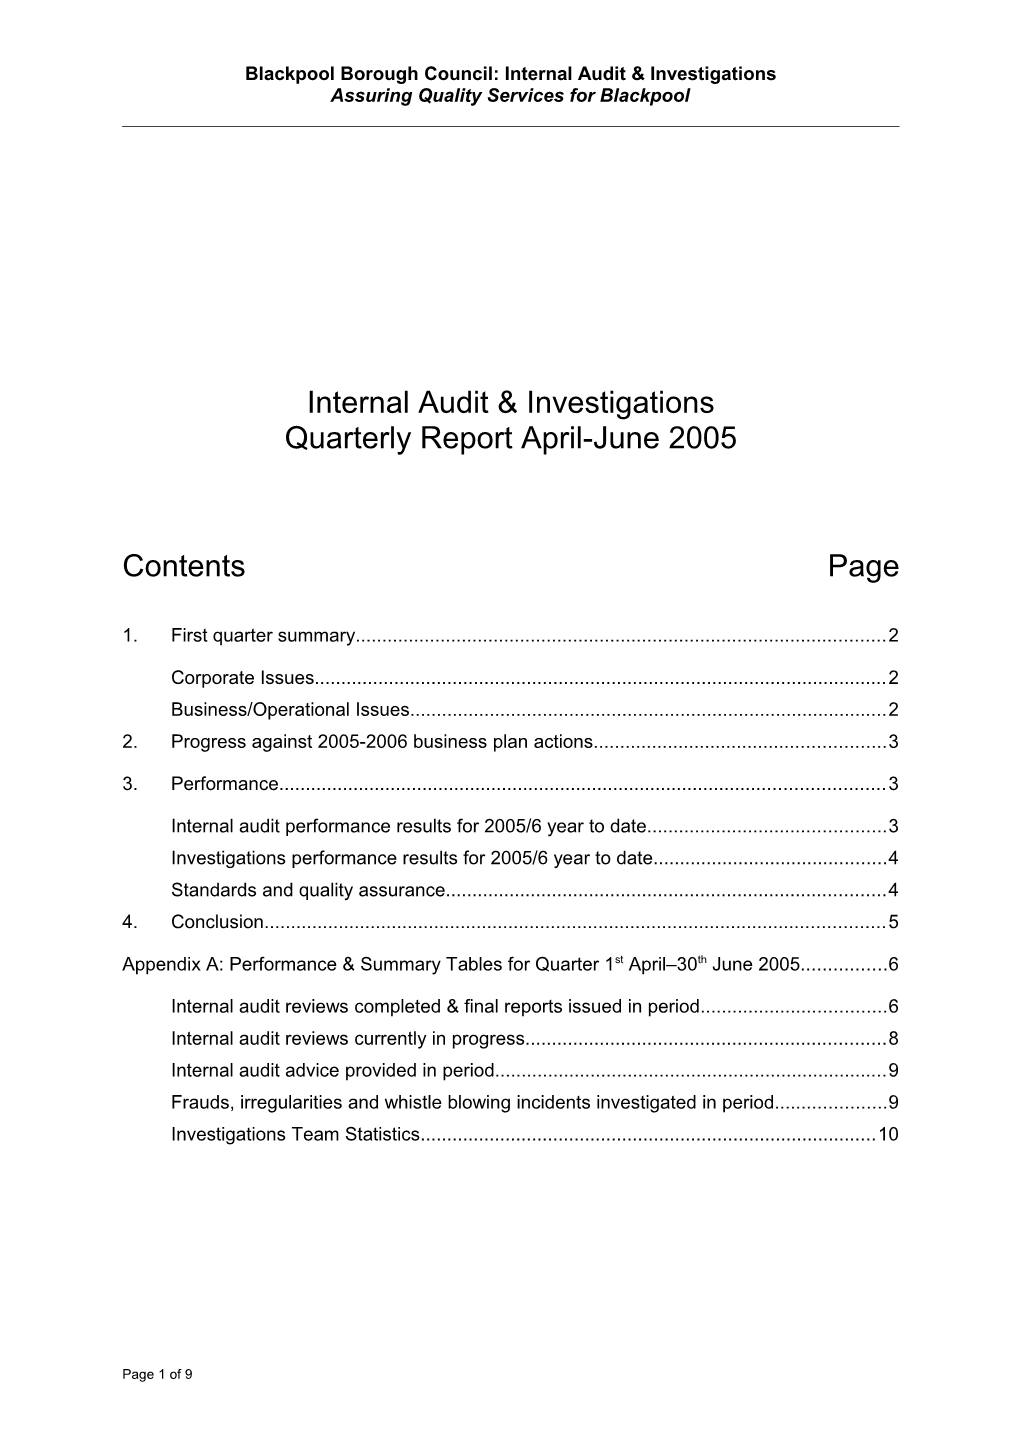 Internal Audit & Investigations Quarterly Report